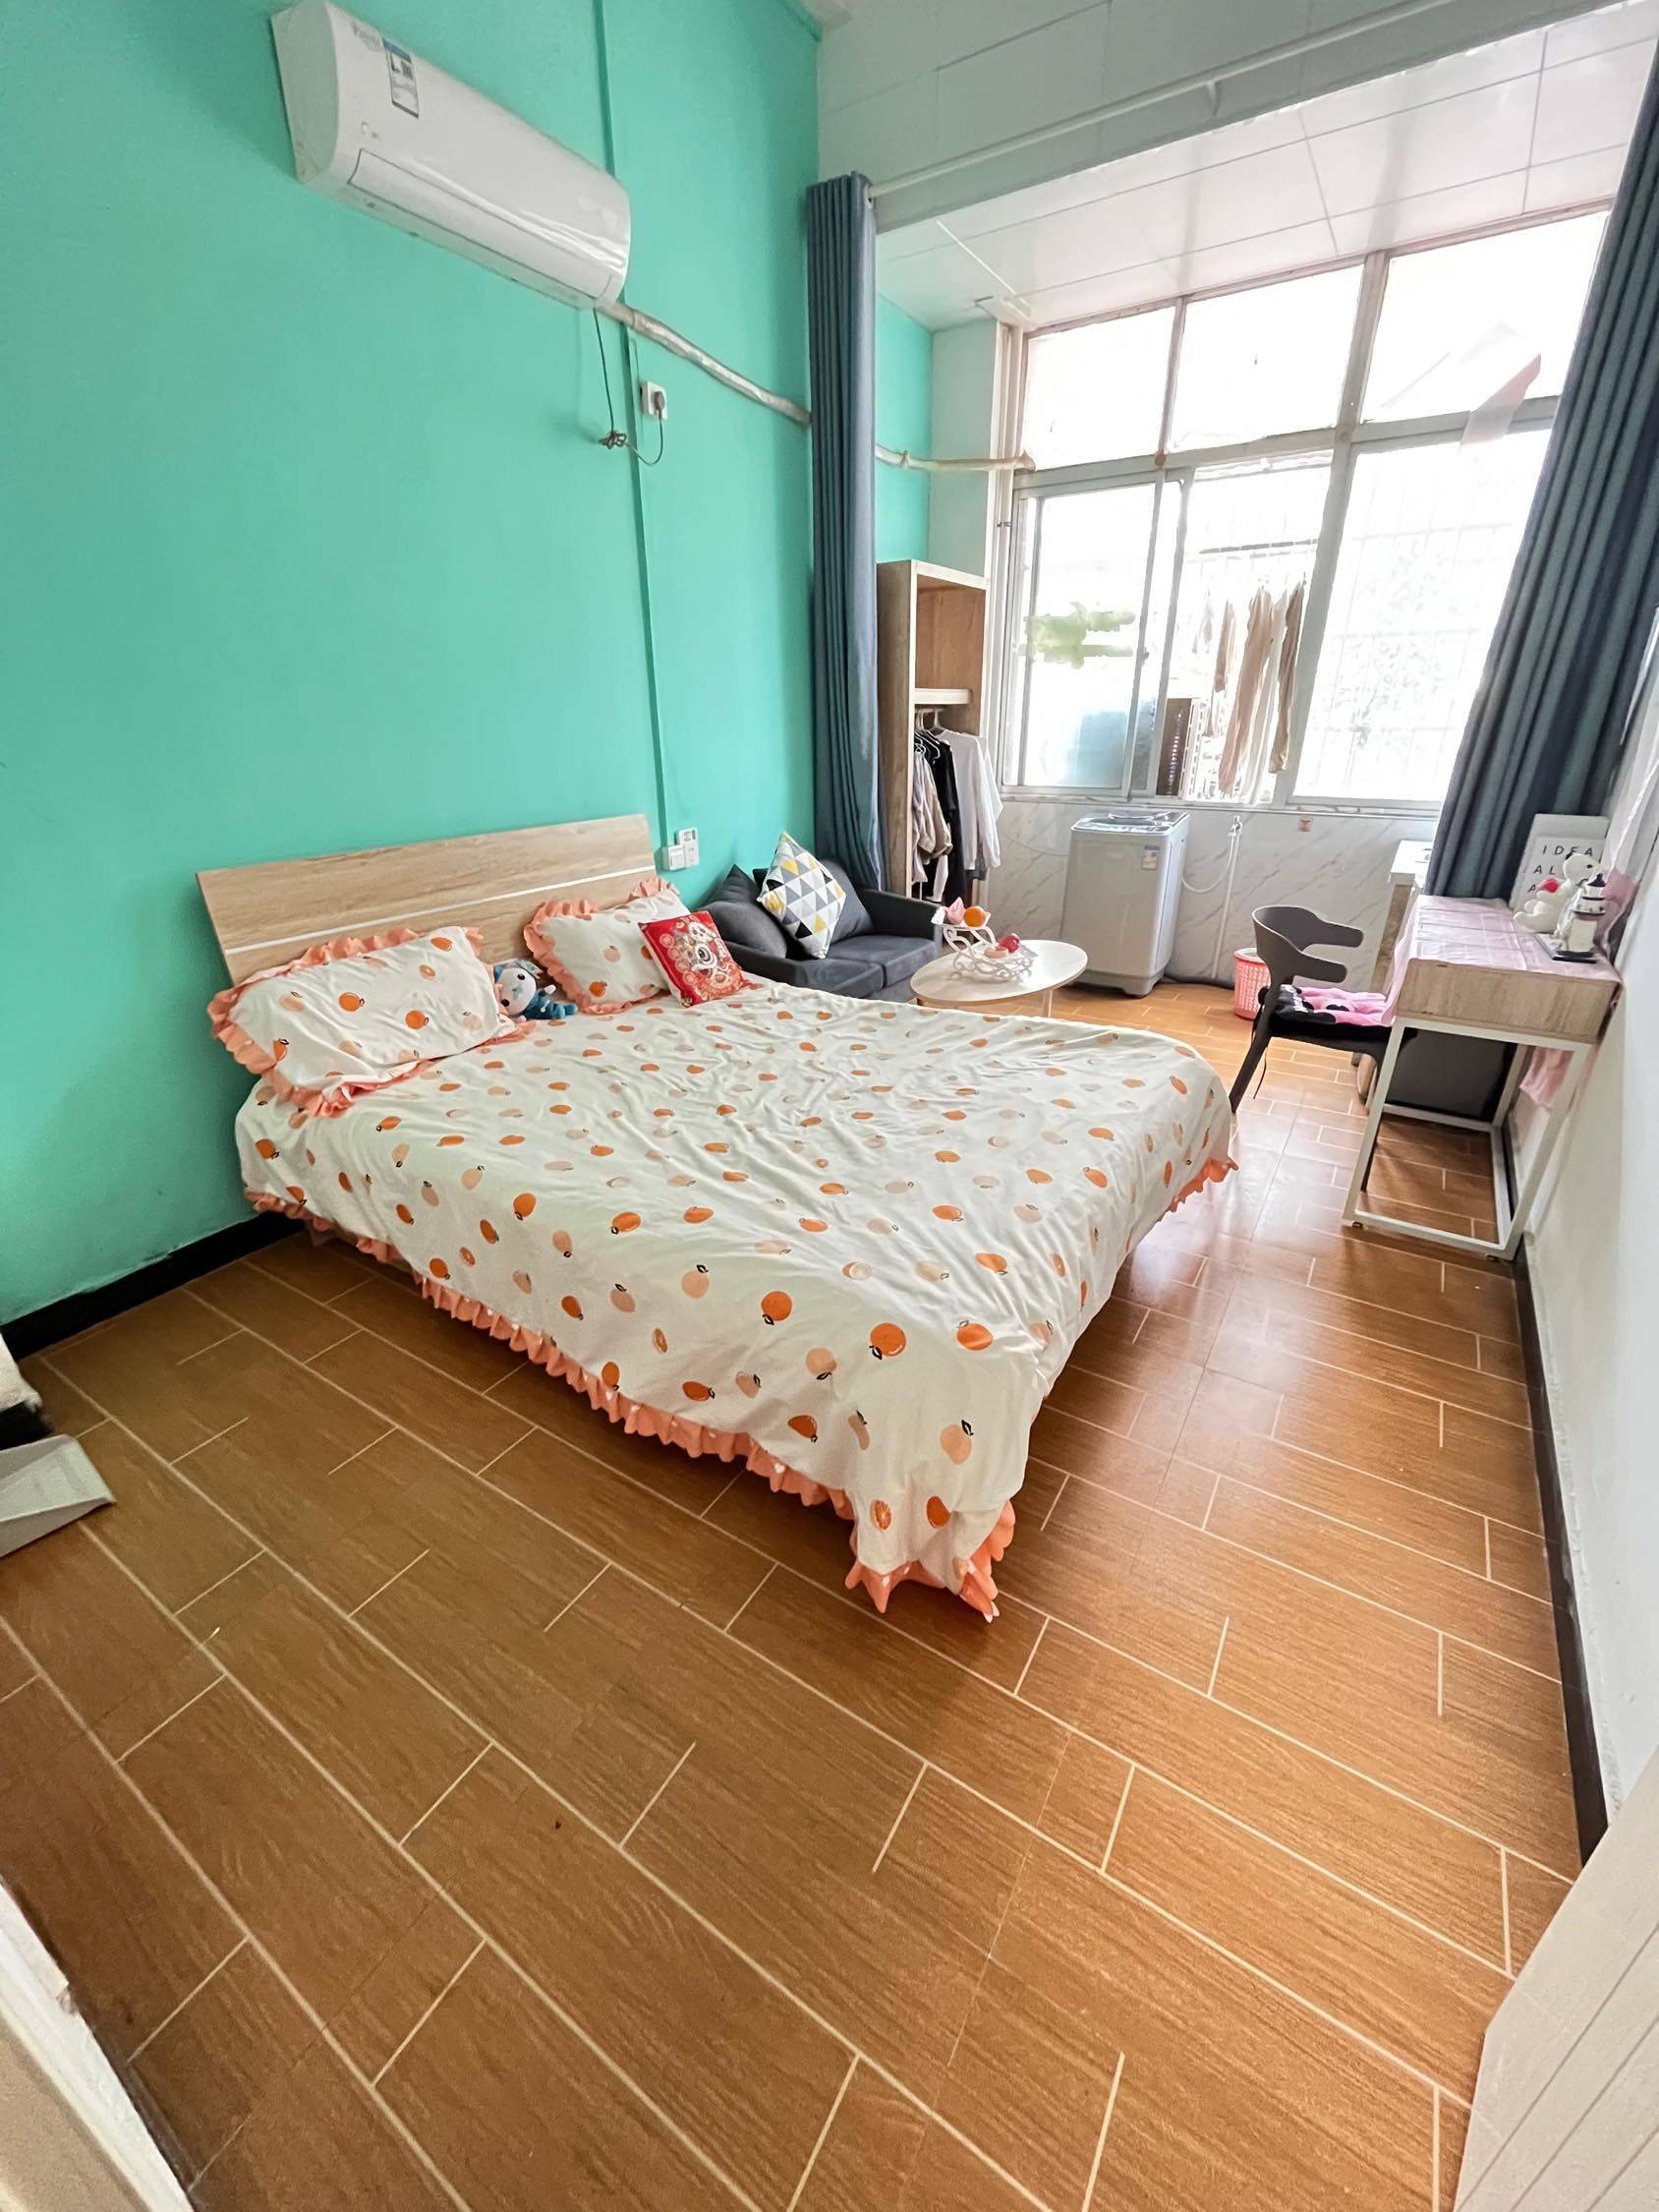 Changsha-Yuelu-Cozy Home,Clean&Comfy,No Gender Limit,Hustle & Bustle,“Friends”,Chilled,LGBTQ Friendly,Pet Friendly